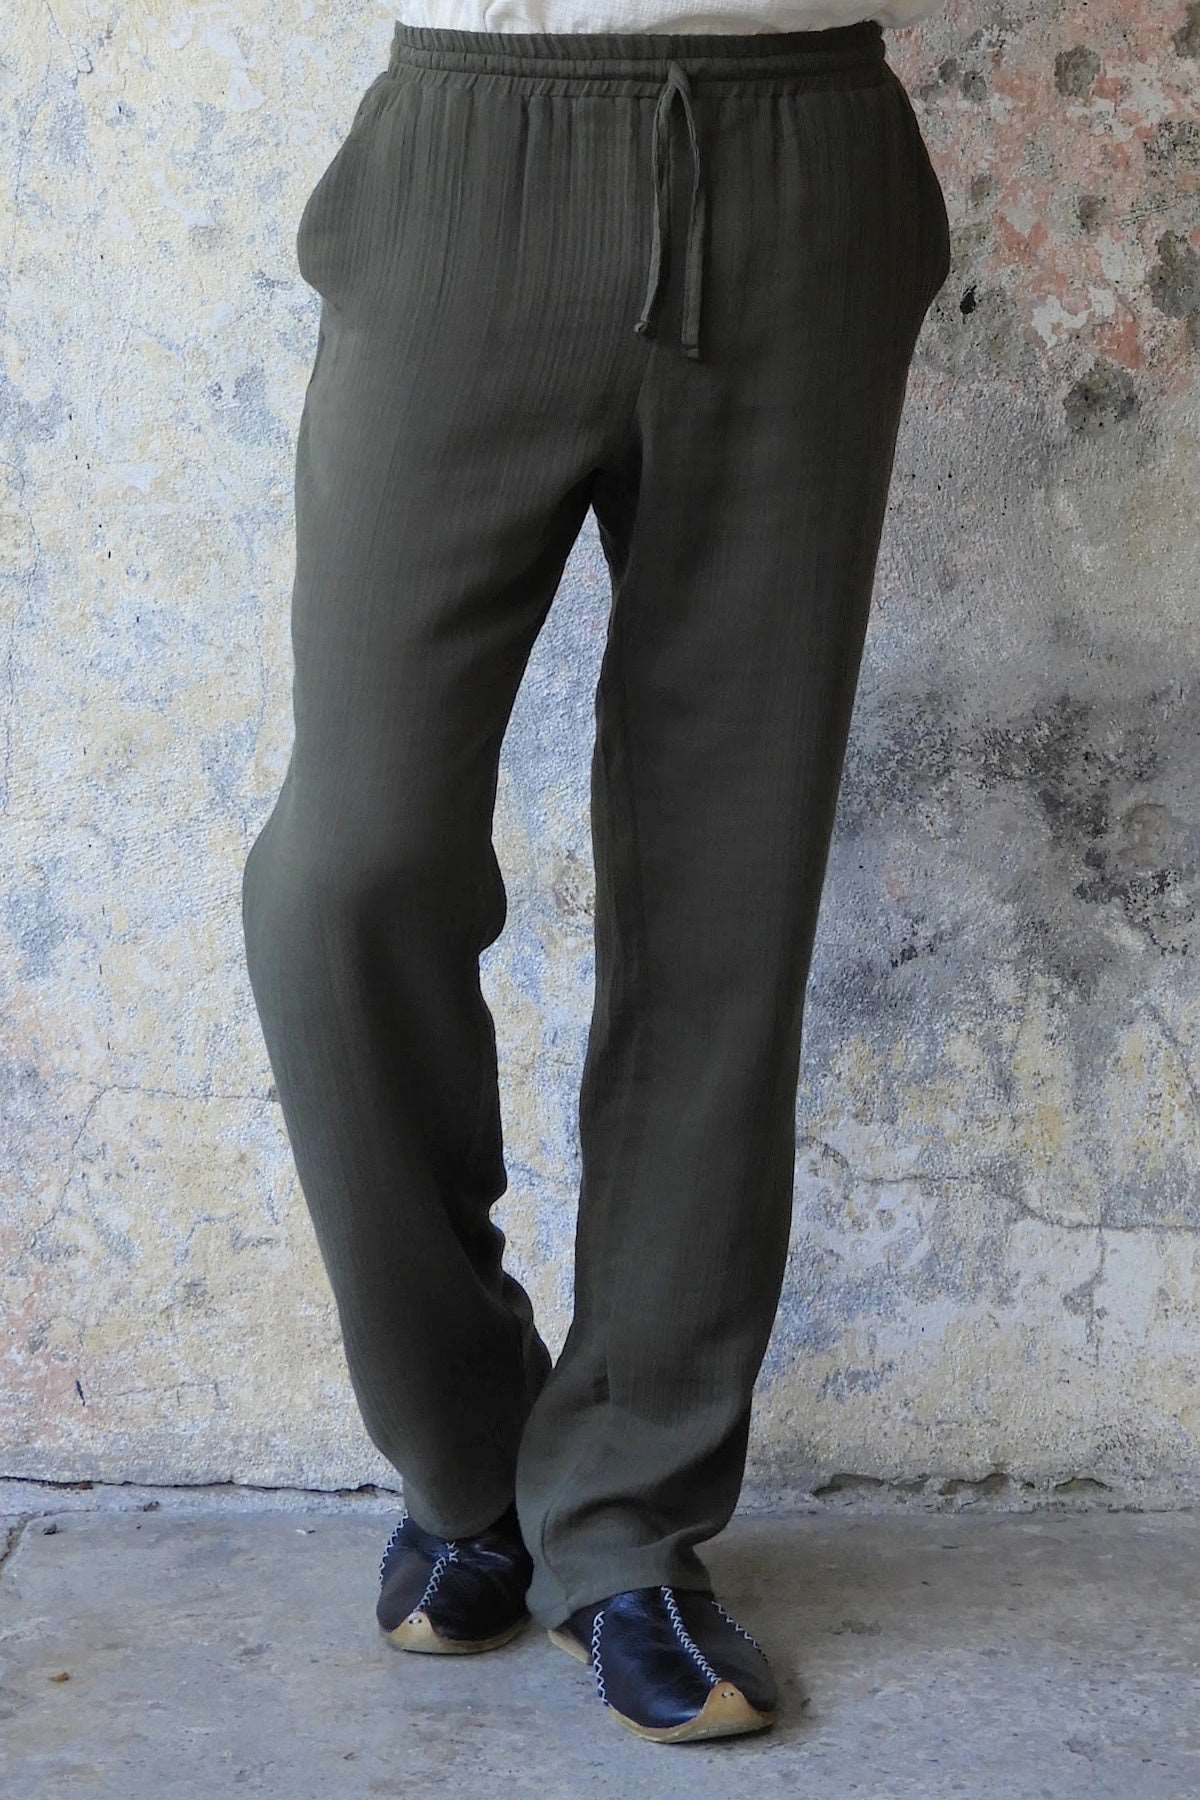 Odana's | DUNE Men's Gauze Cotton Pants (Army Green, Dusty Mint) Army Green | Harem Pants | Sustainable Fashion